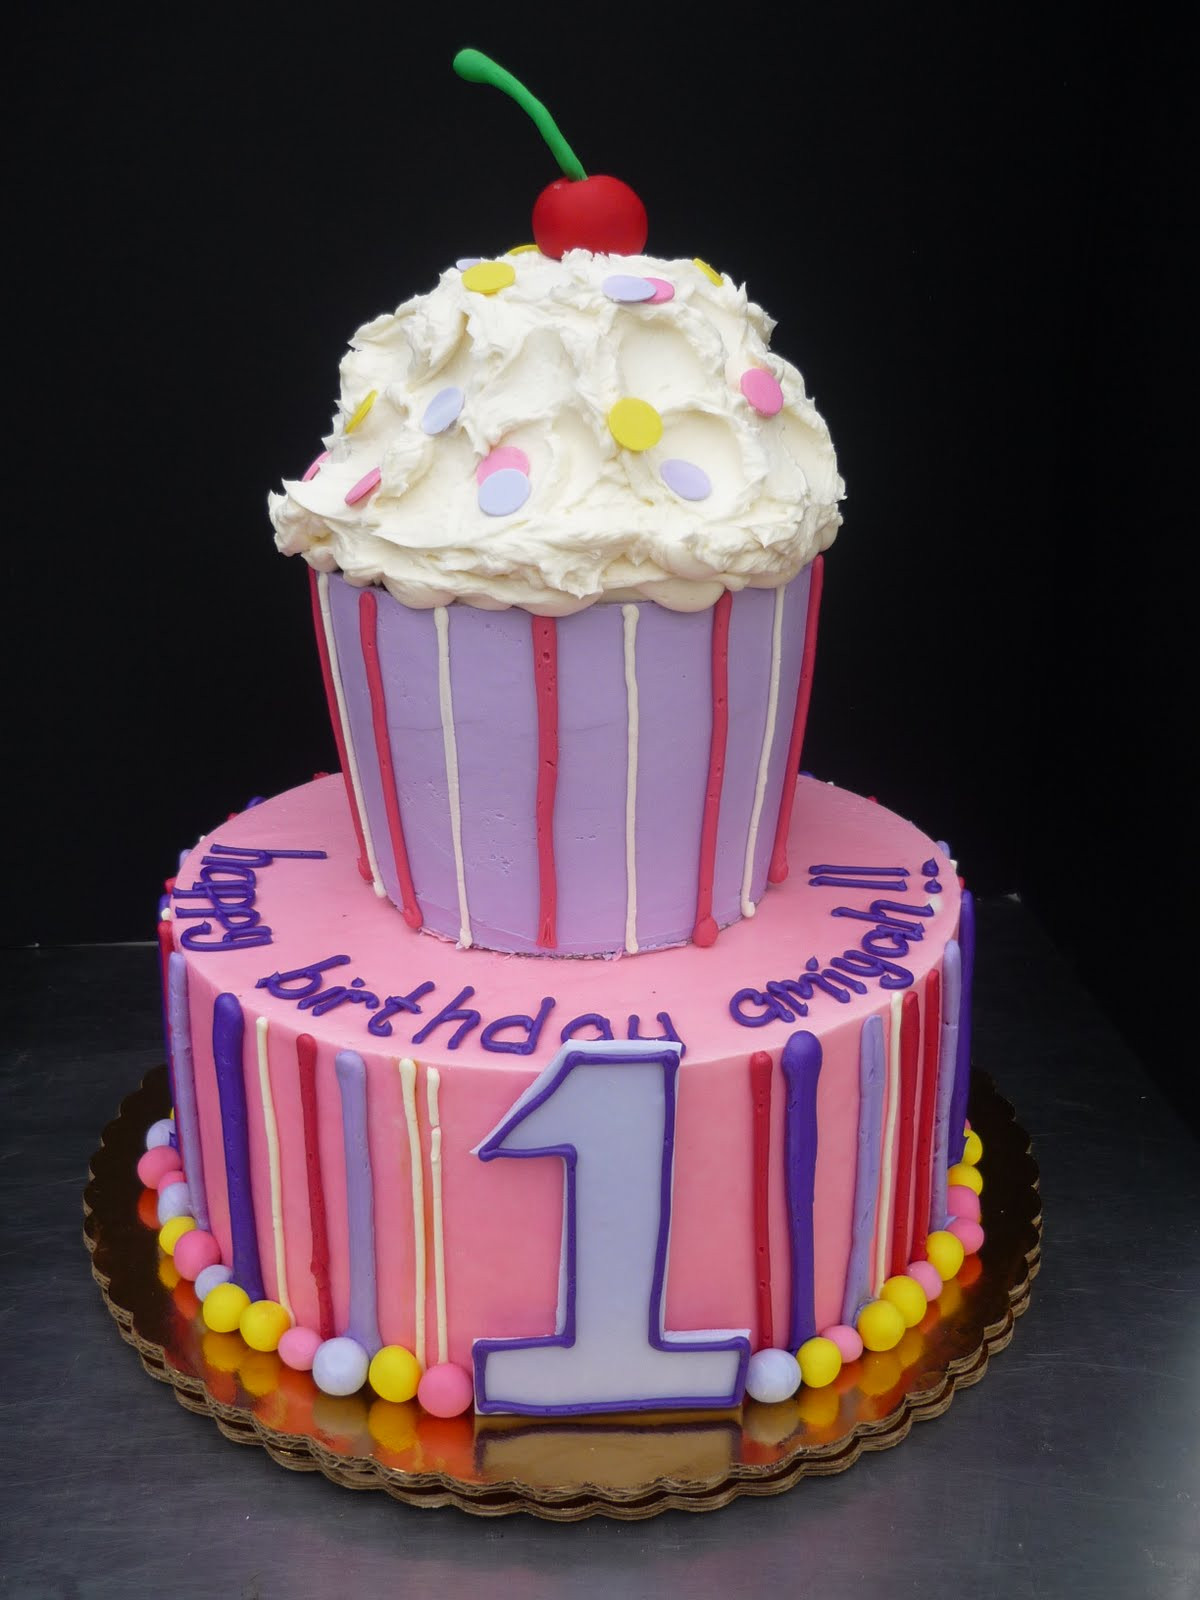 Cupcake Birthday Cakes
 Artisan Bake Shop First Birthday Cakes Giant CupCake